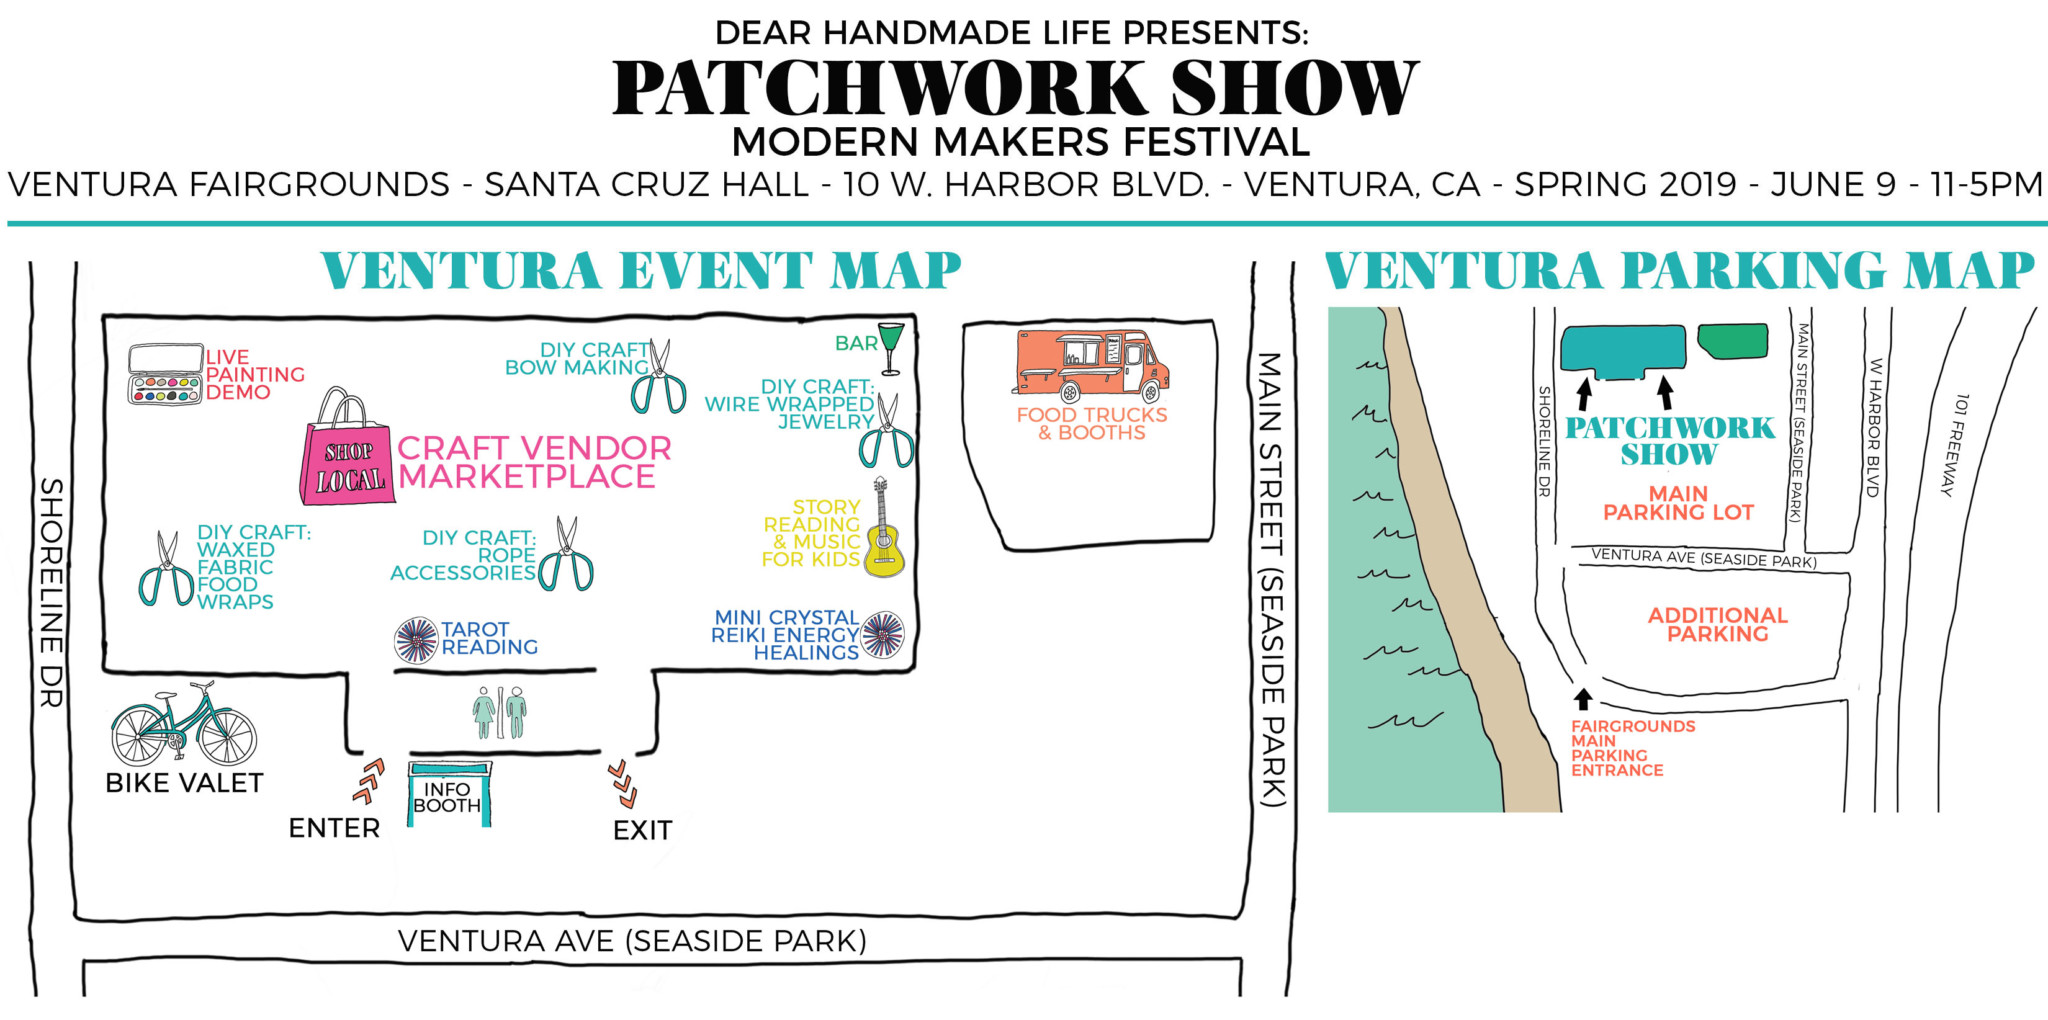 *NEW patchwork show ventura event and parking map Dear Handmade Life